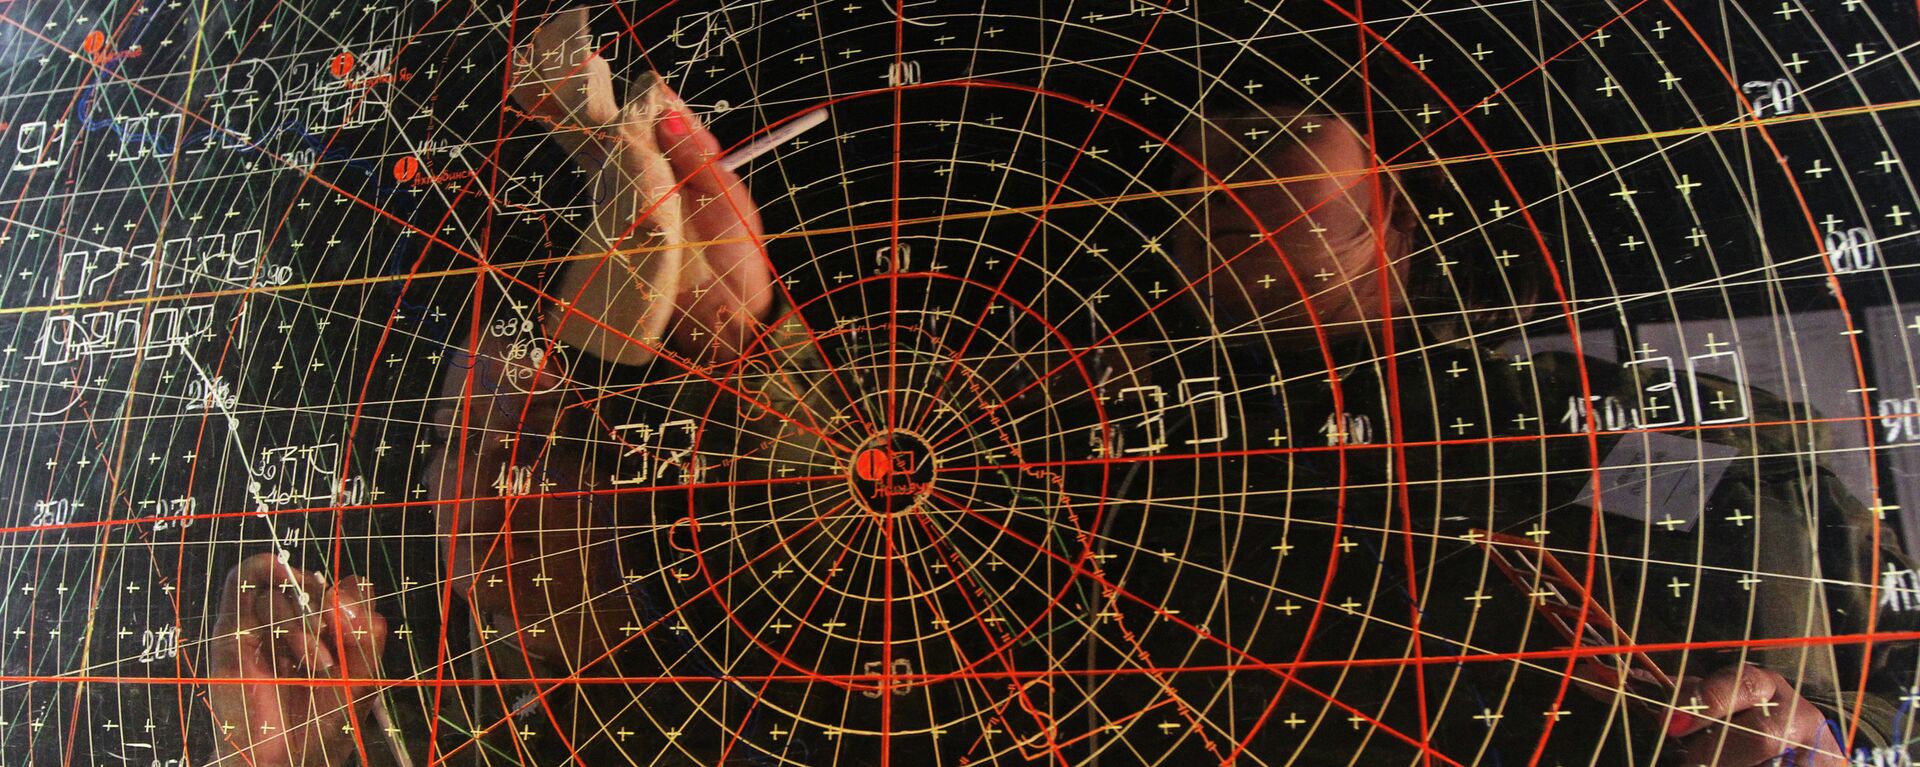 Un radar, imagen referencial - Sputnik Mundo, 1920, 31.03.2021